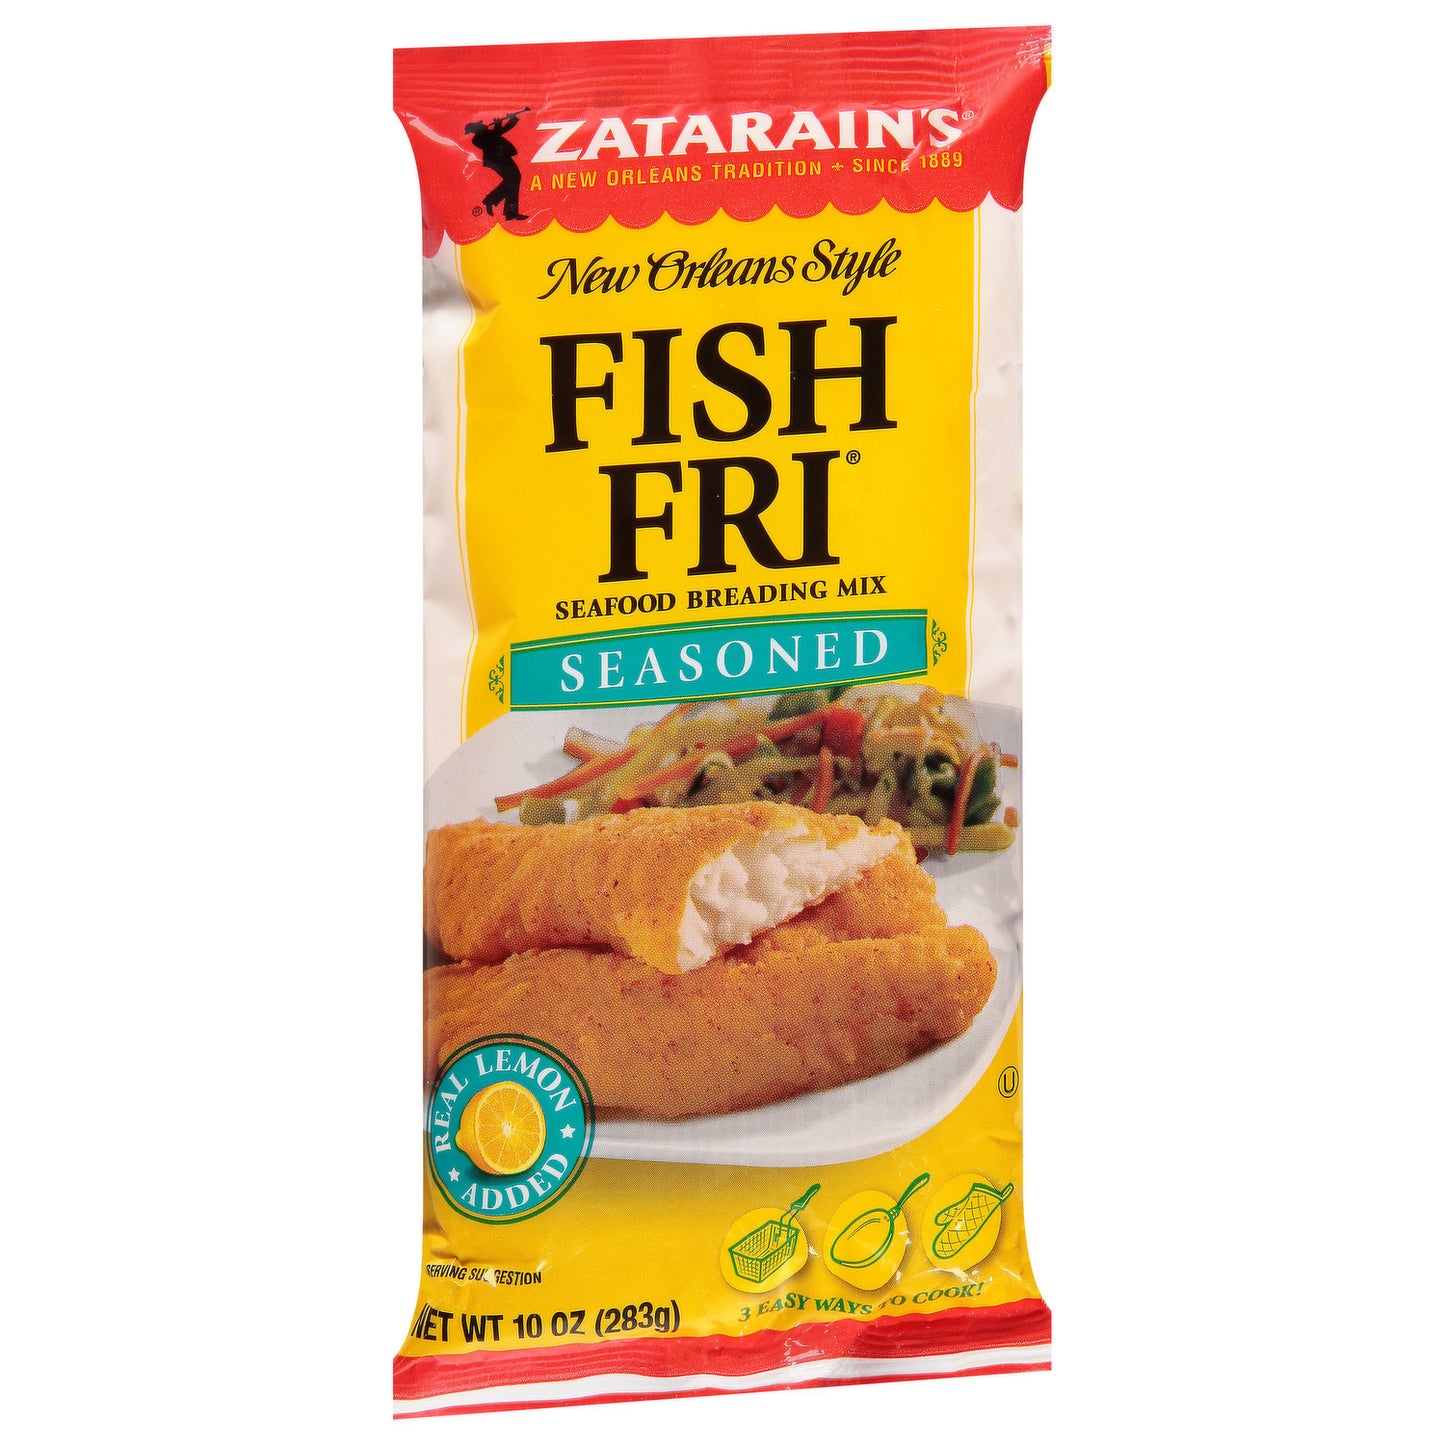 Zatarian's New Orleans Style Fish Fri Seafood Breading Mix (Seasoned) 283g